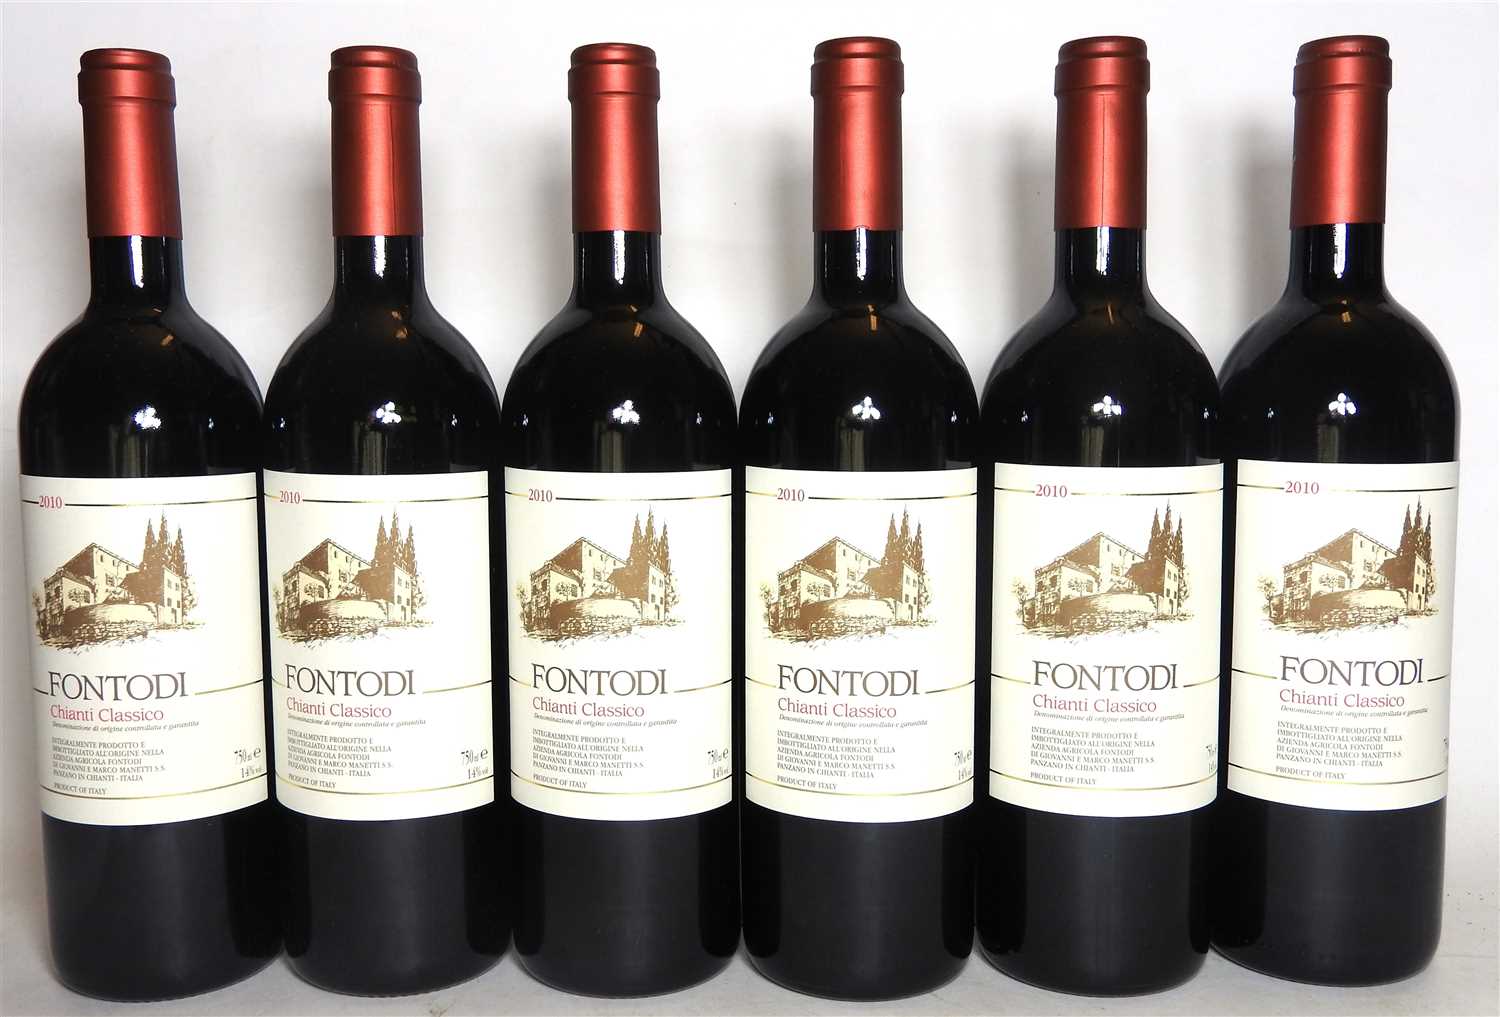 Lot 183 - Fontodi, Chianti Classico, 2010, six bottles (Wine Society box)